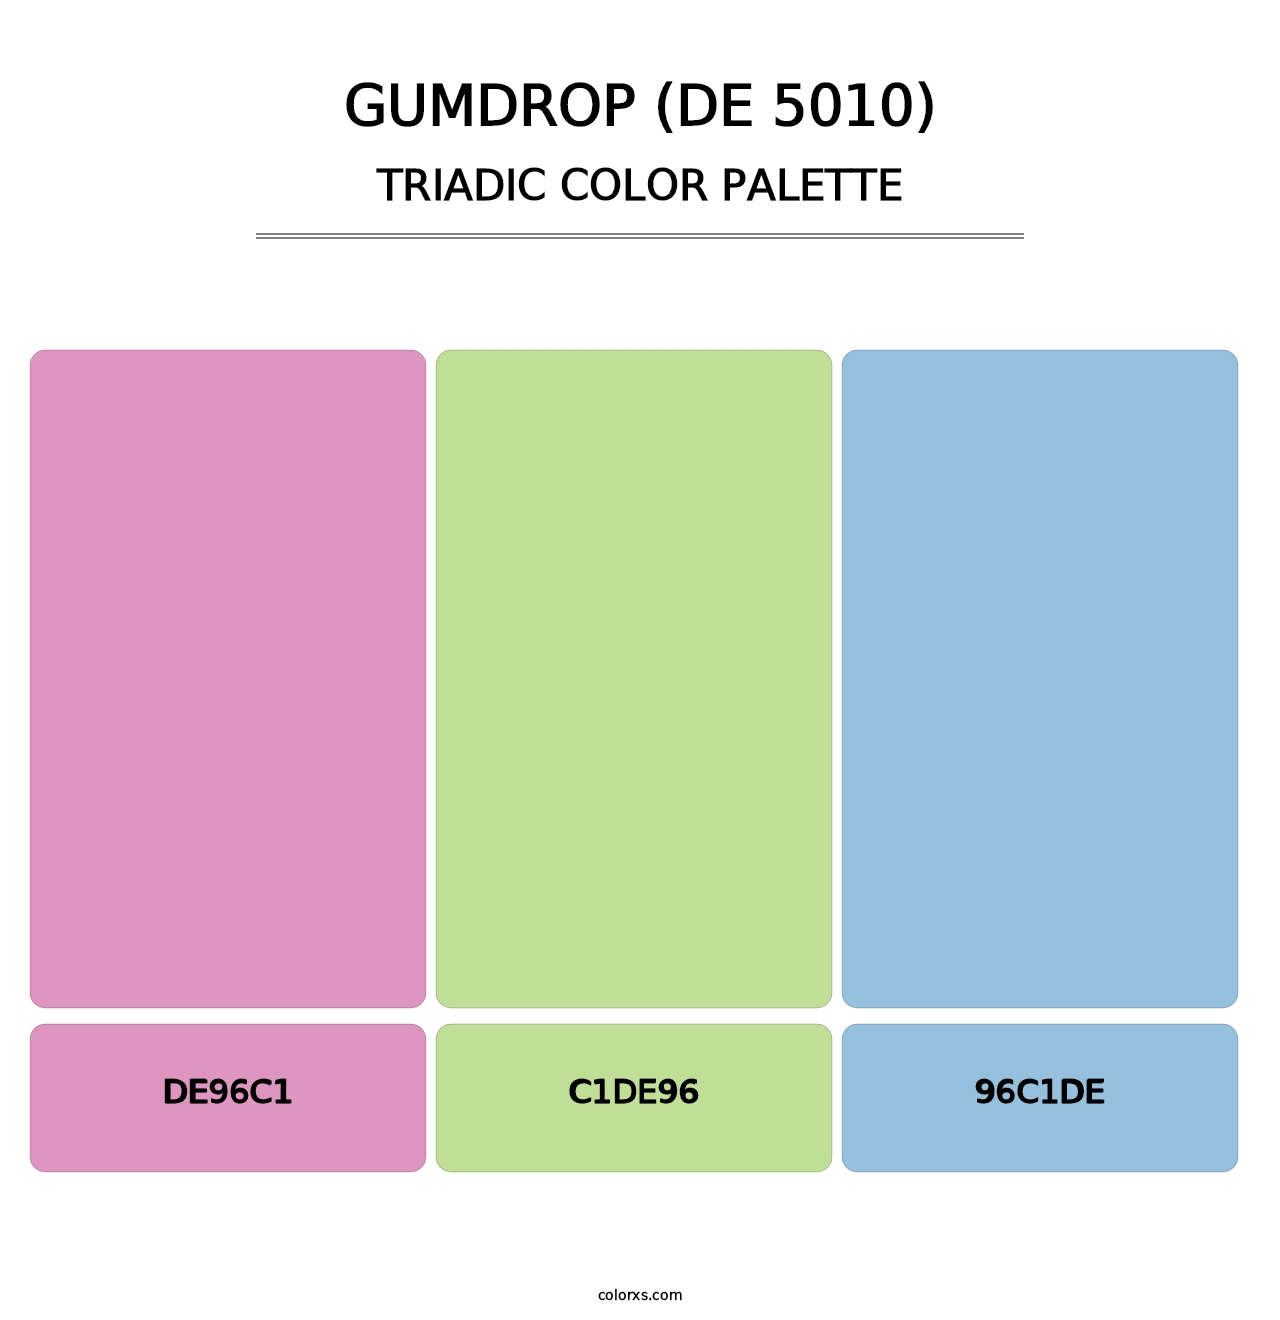 Gumdrop (DE 5010) - Triadic Color Palette